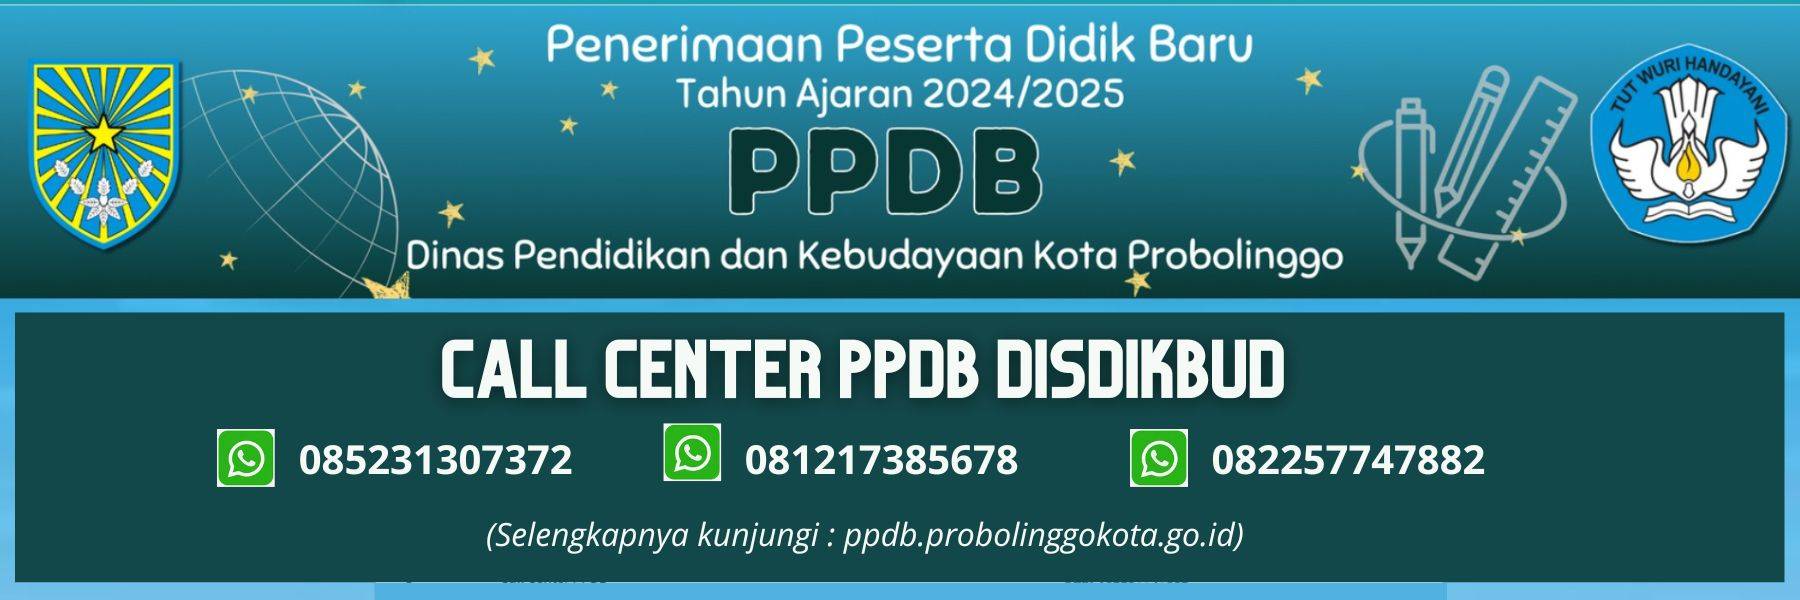 Call Center PPDB